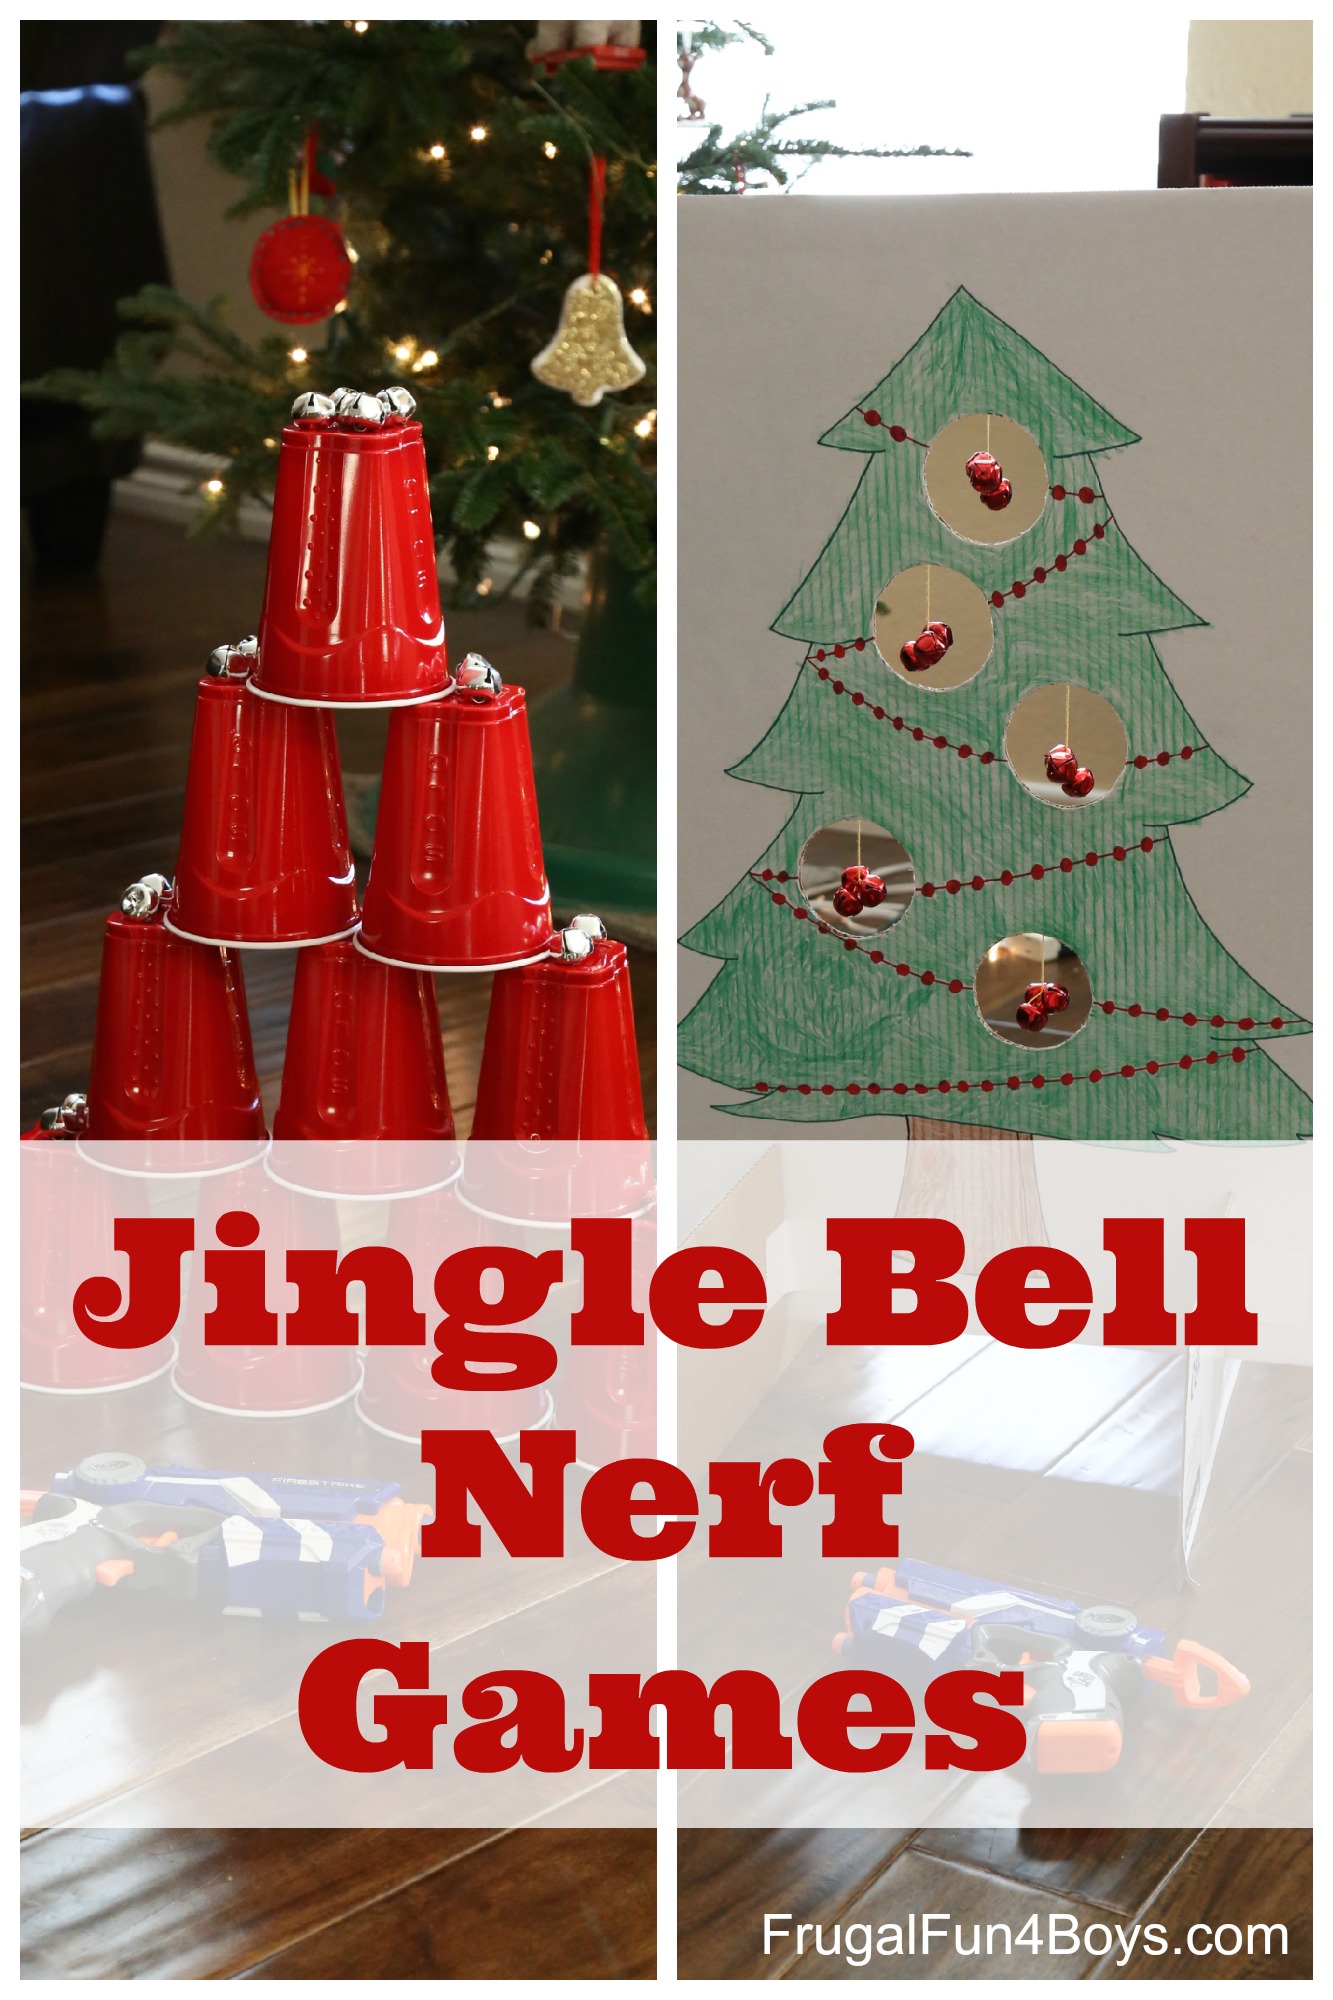 Jingle-Bell-Nerf-Games-Pin.jpg